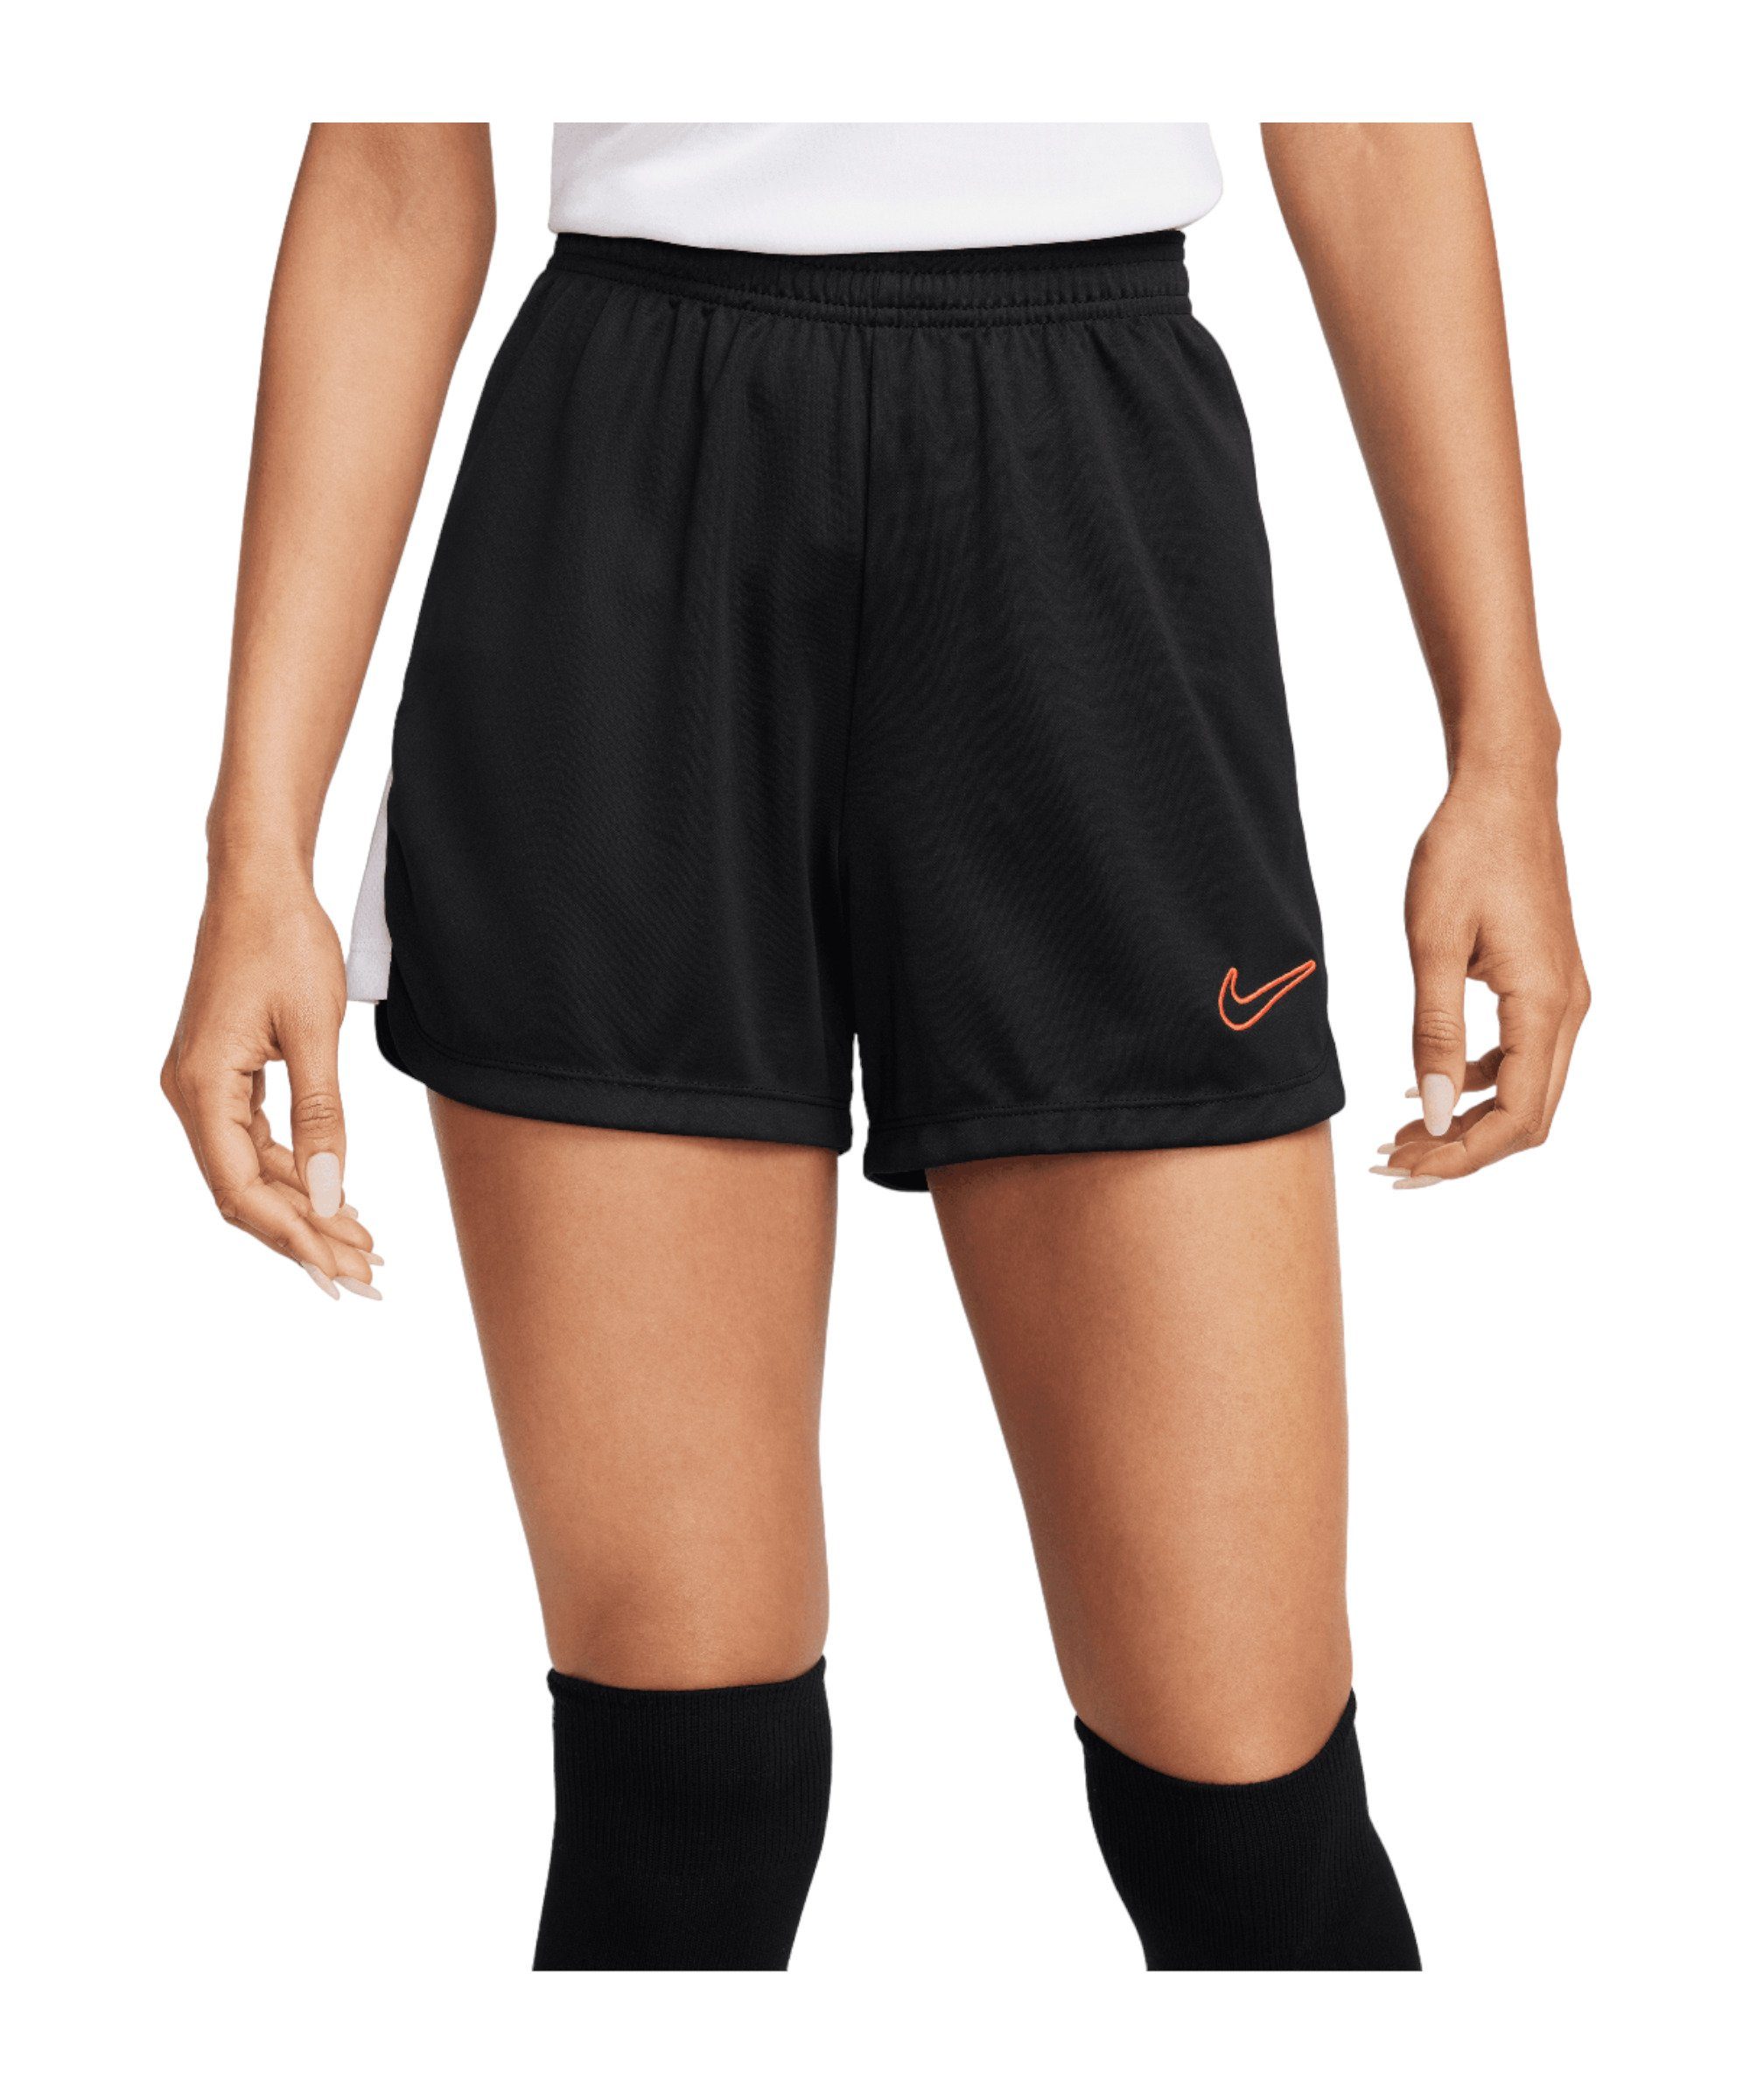 23 Damen Short Sporthose Nike Academy schwarzweissrot